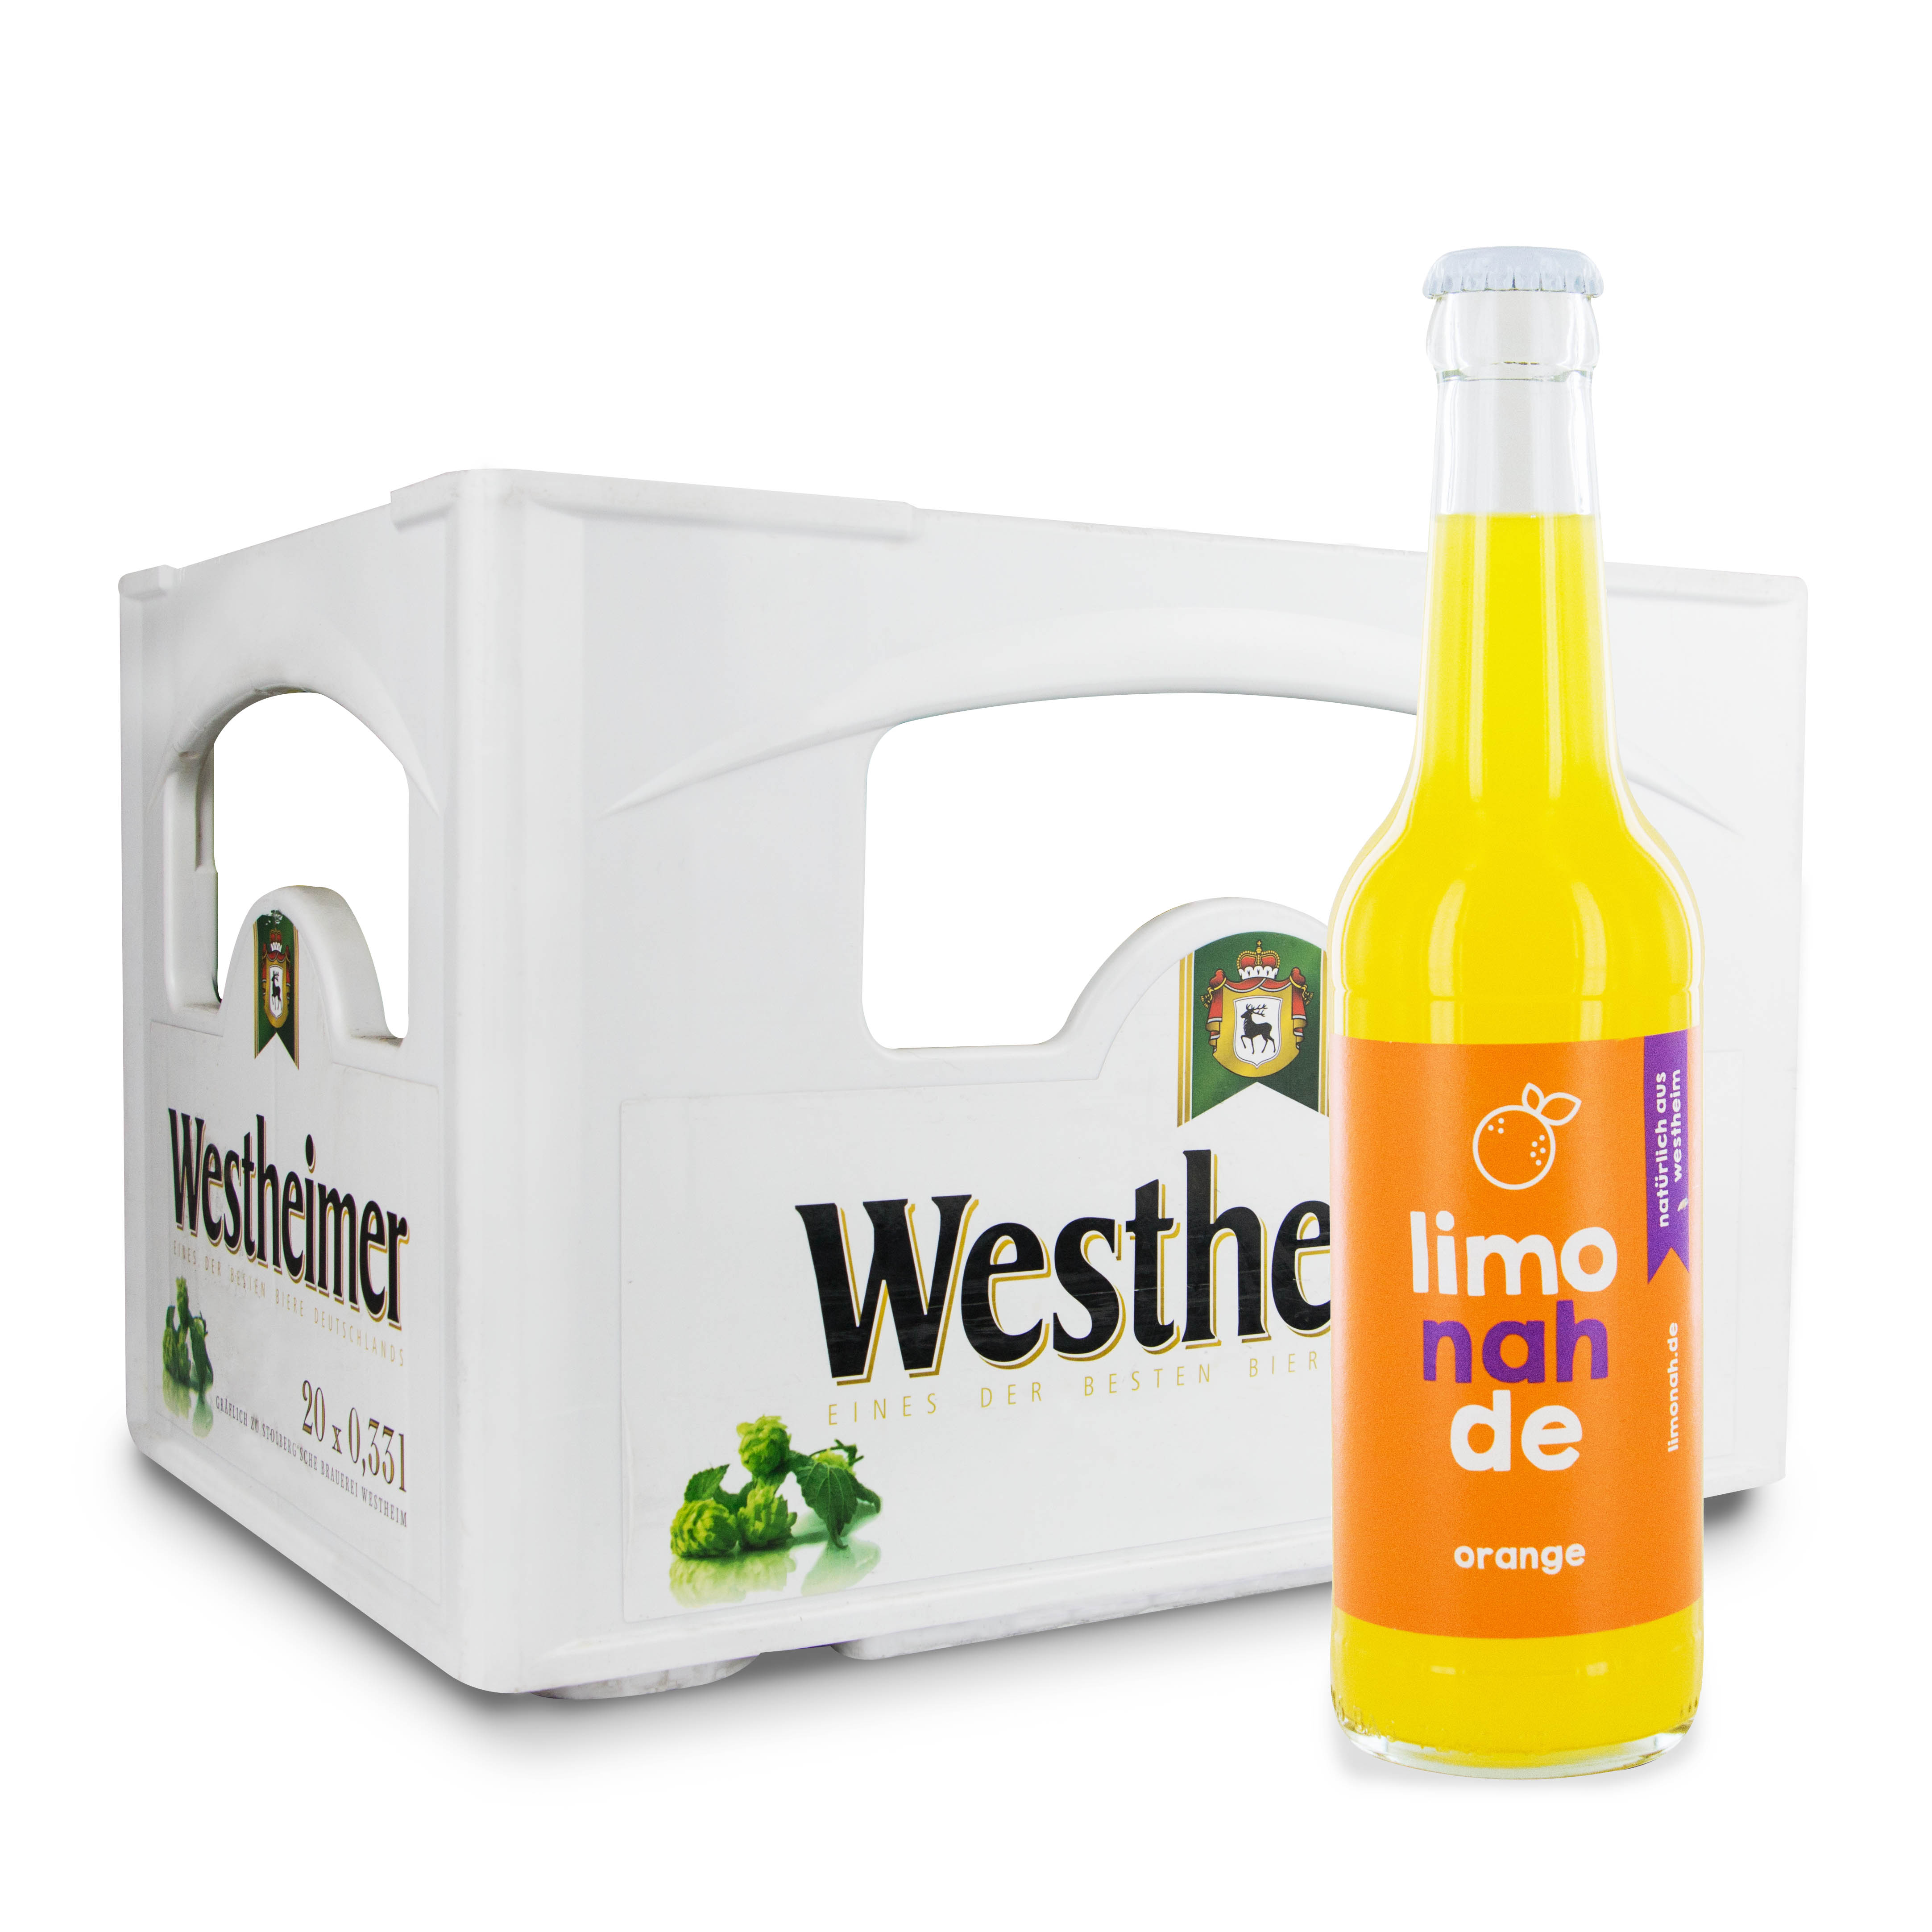 Westheimer limoNAHde Orange in der Kiste-slides